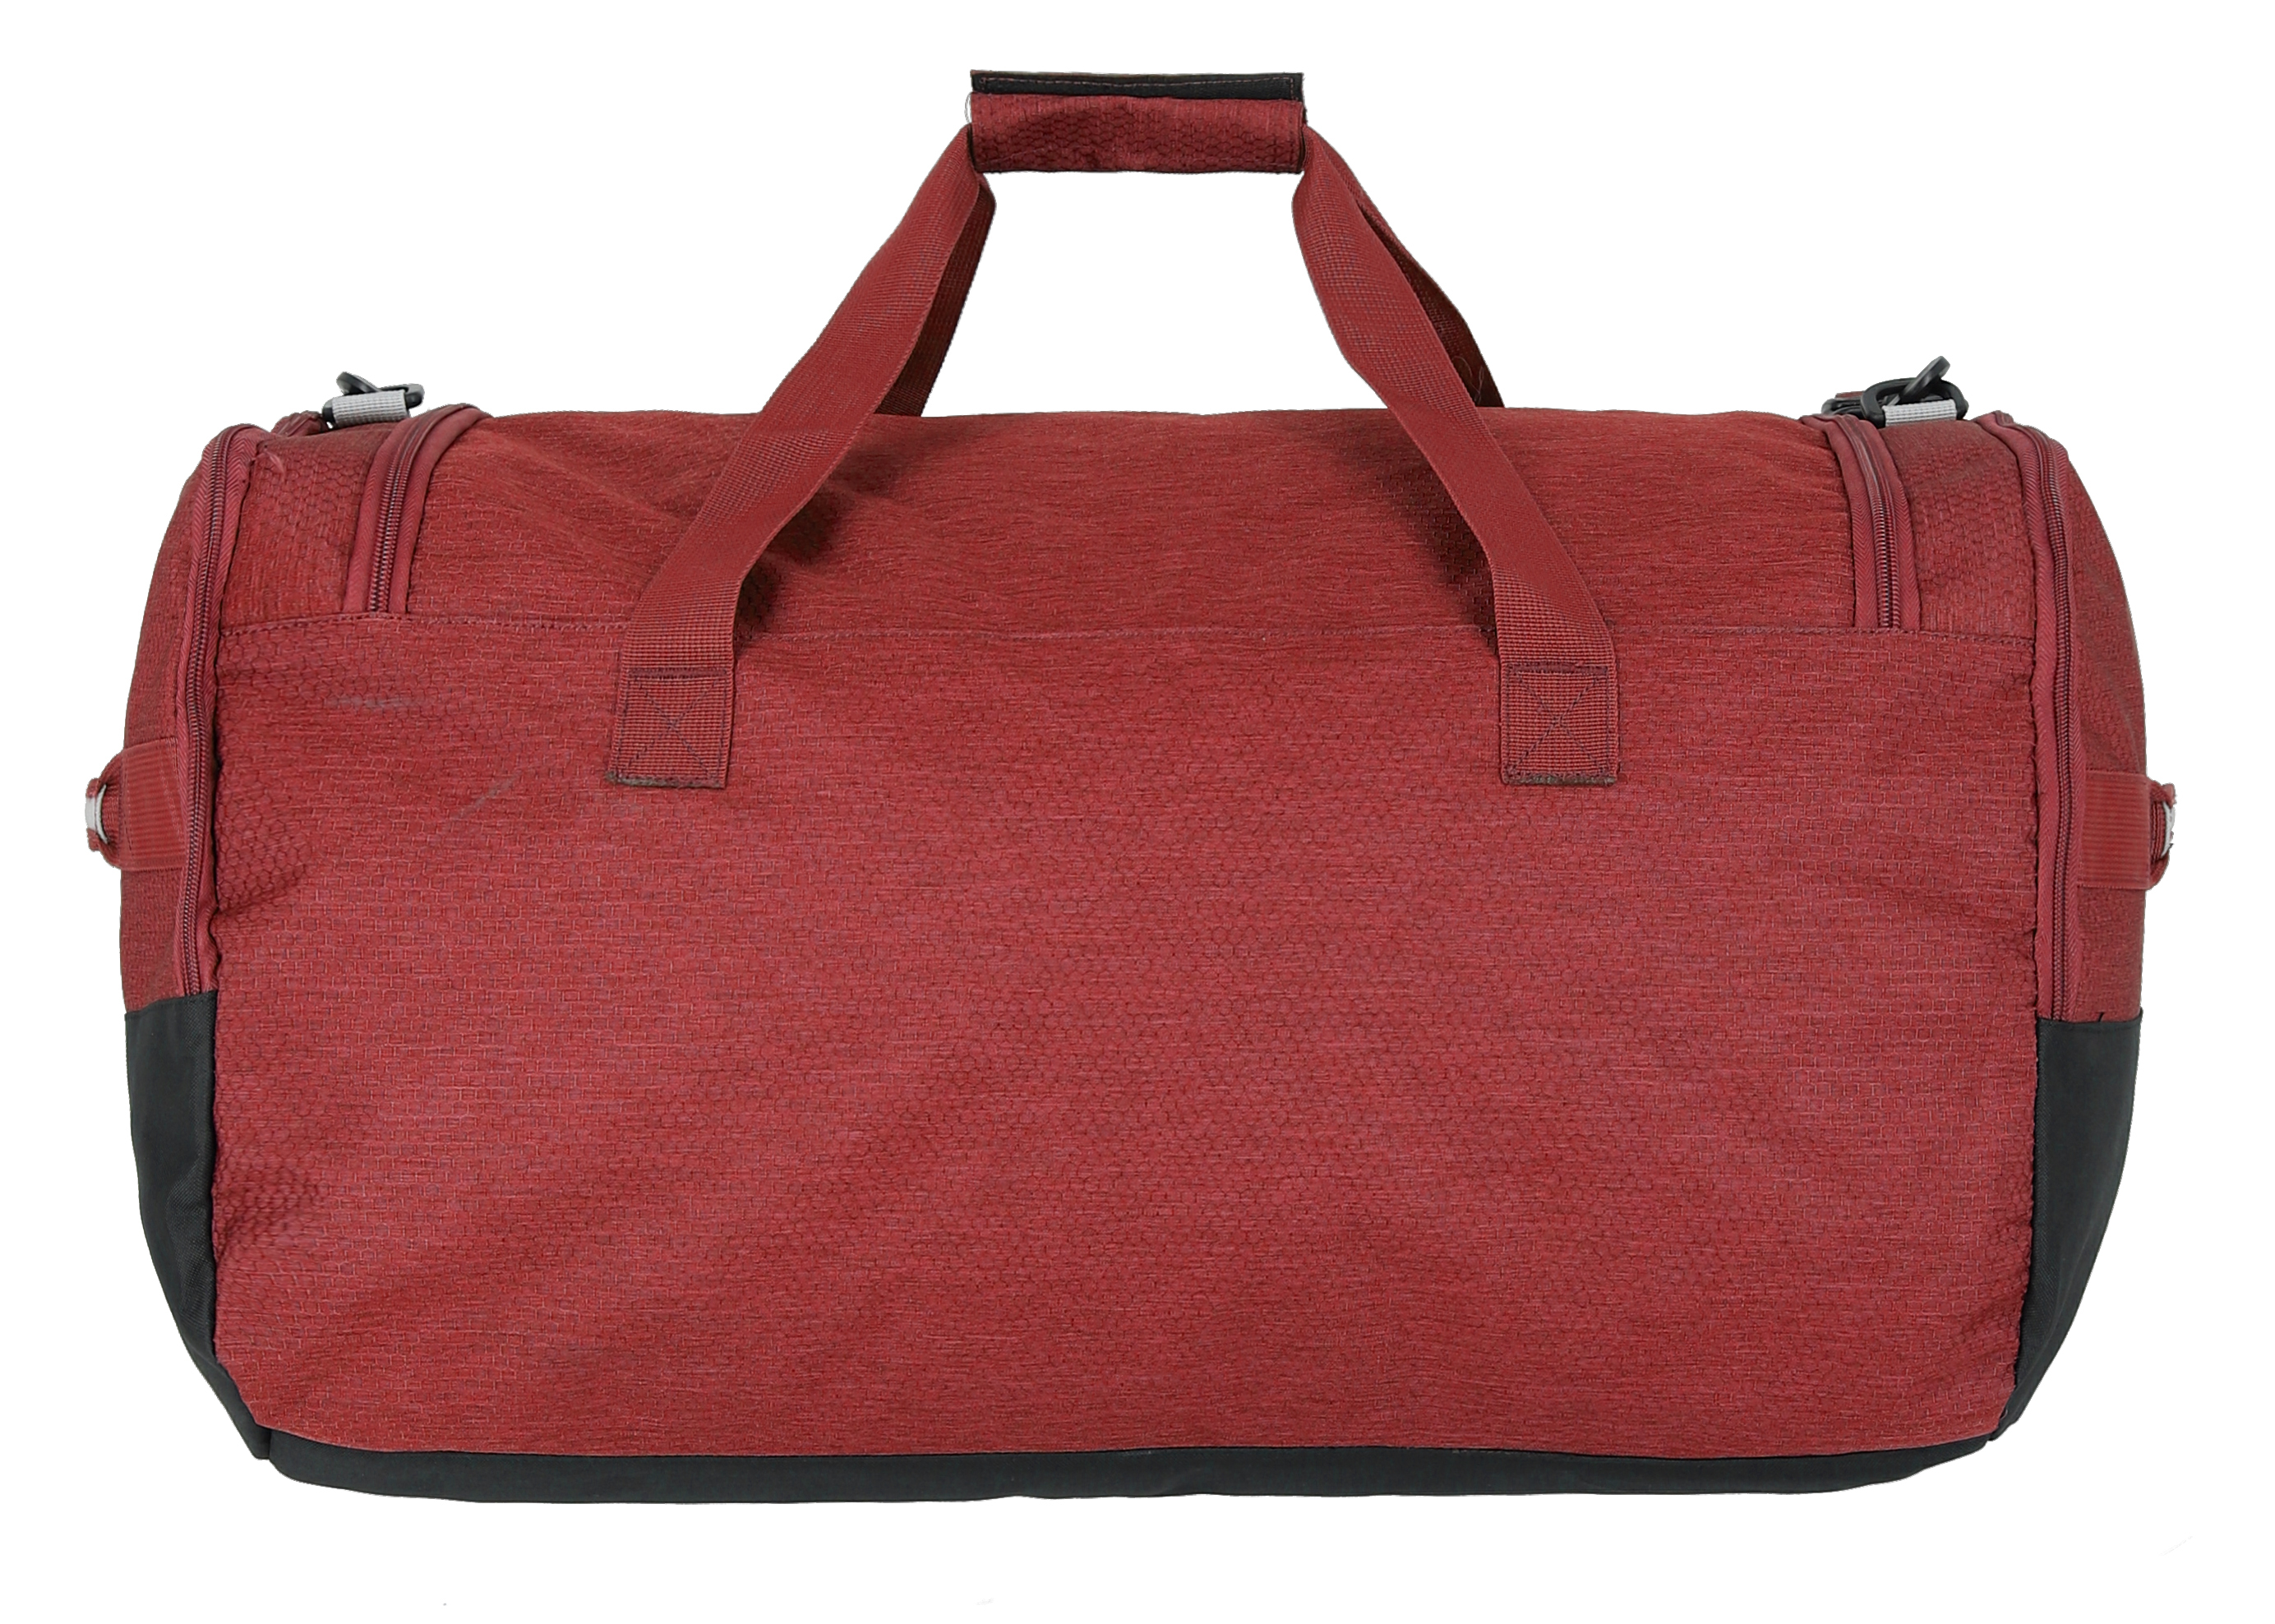 travelite  Kick Off Reisetasche L - Duffle Bag - Rot (Rot)